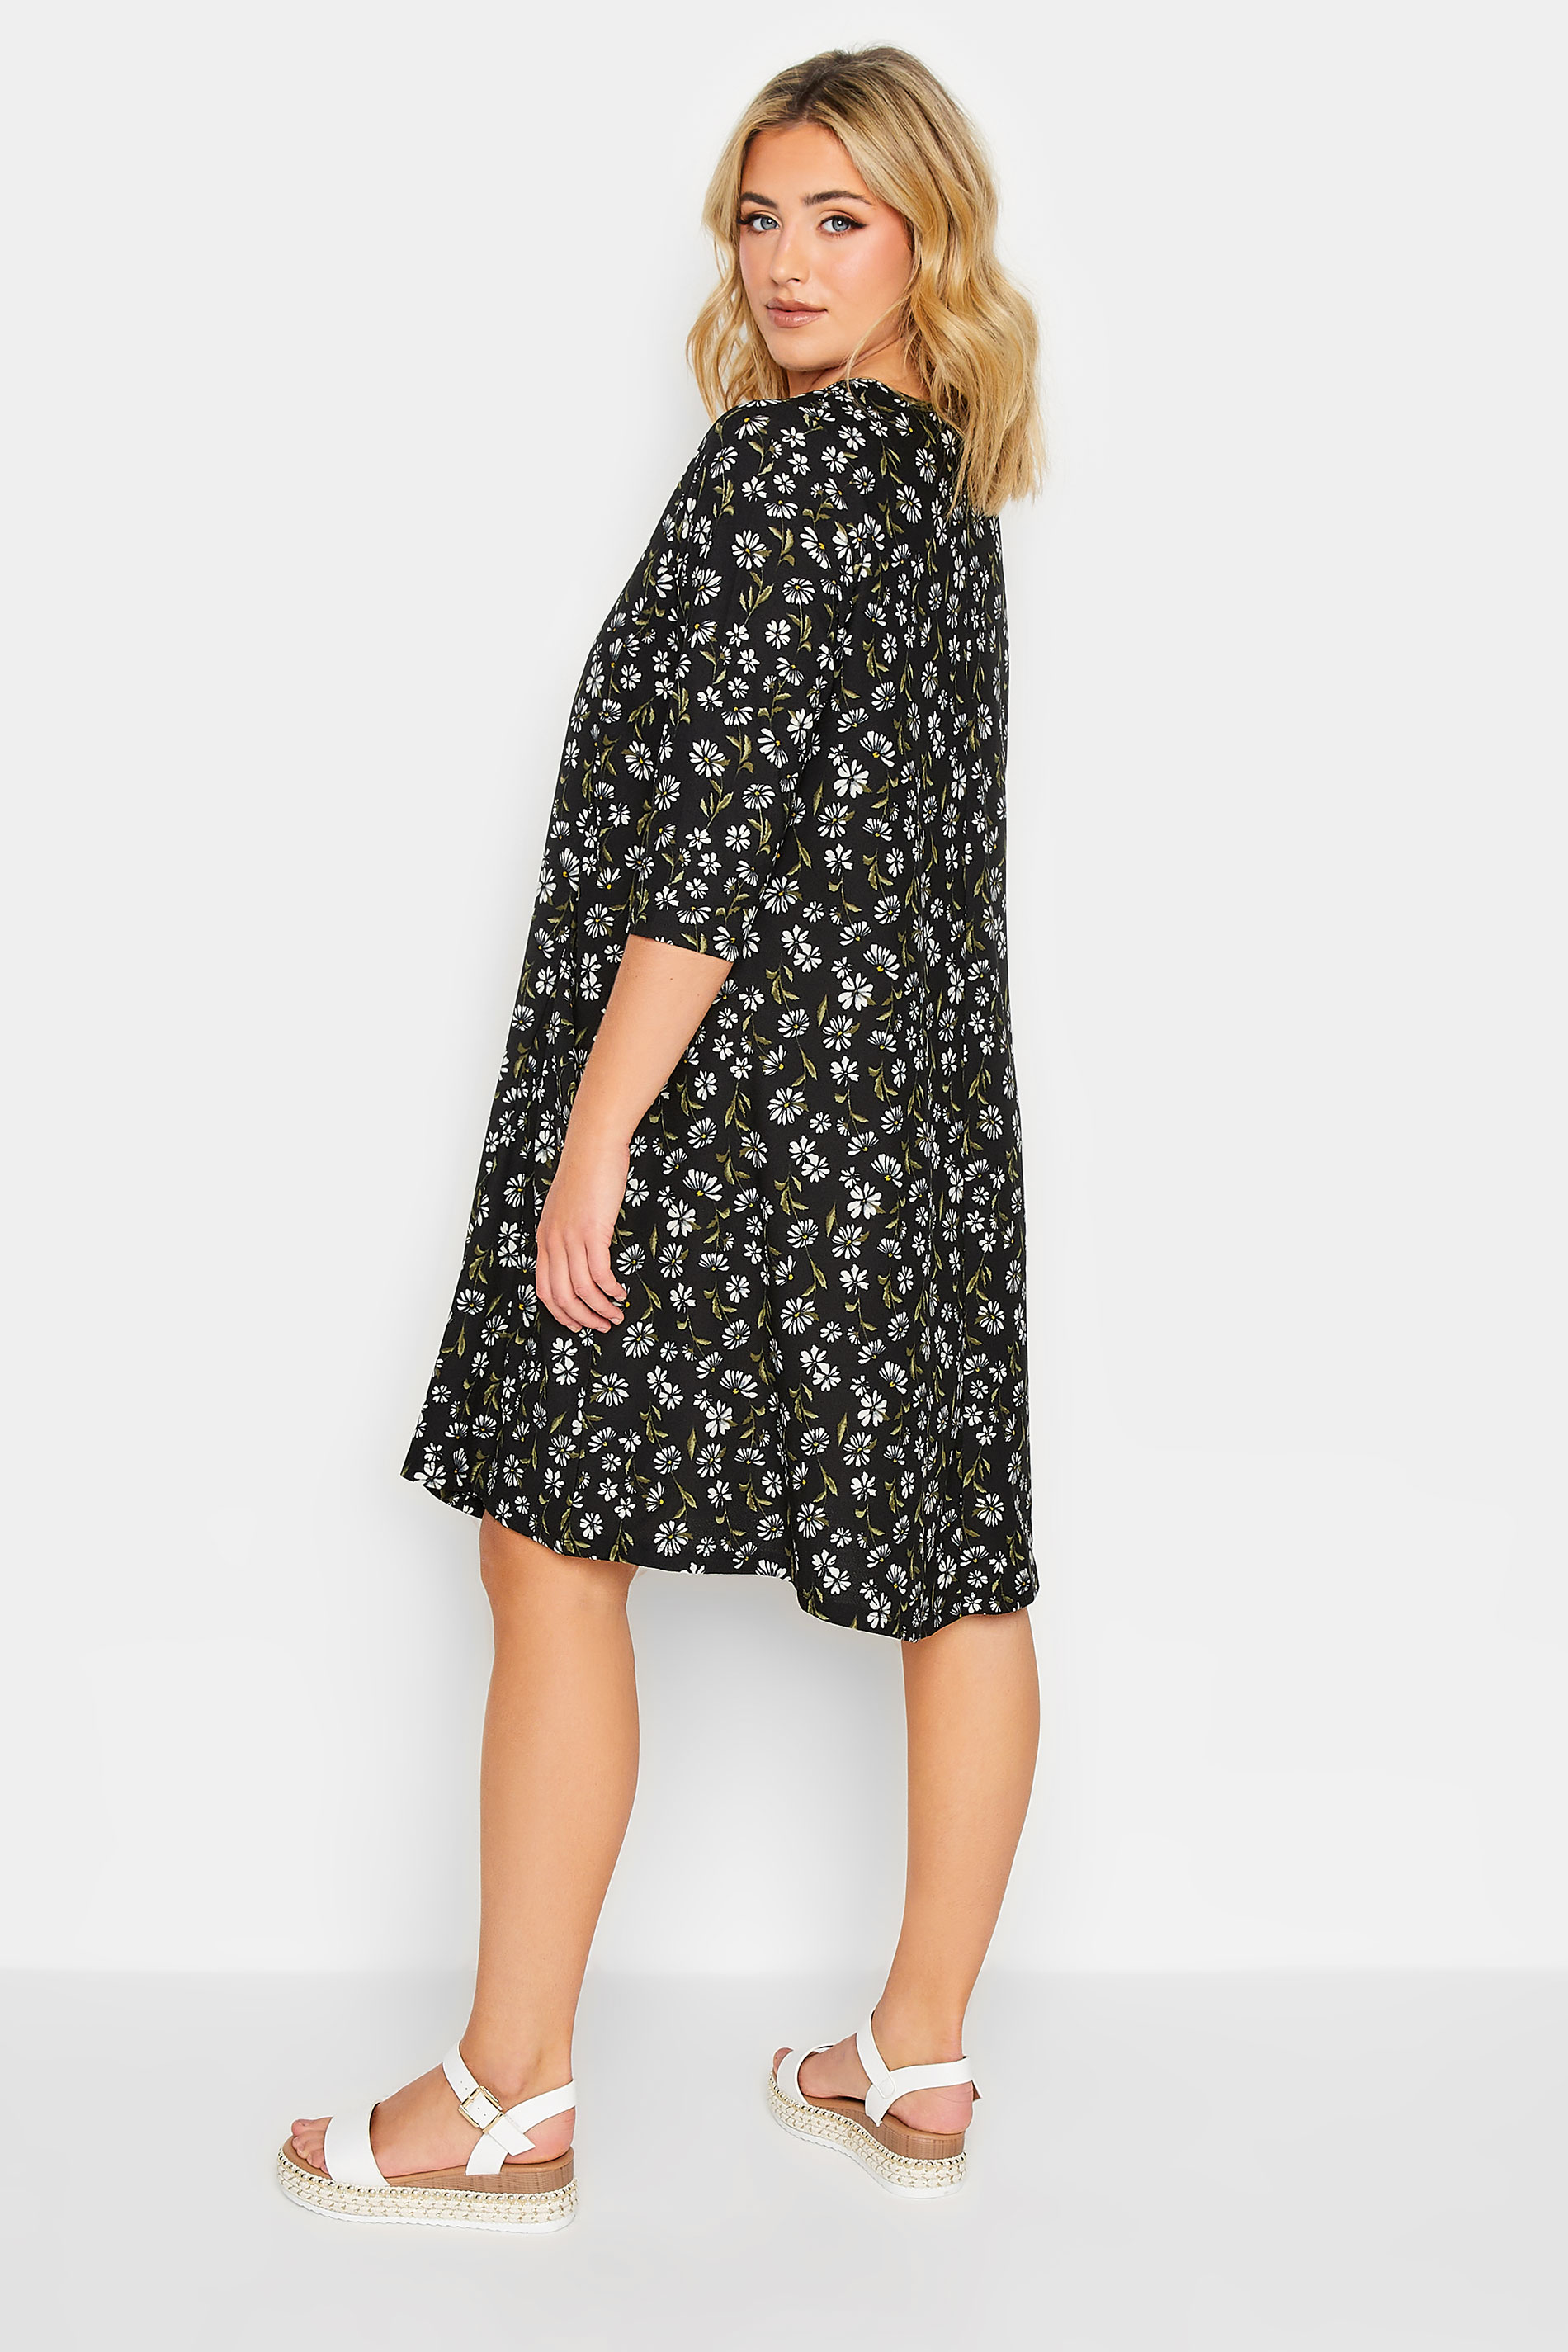 YOURS Plus Size Black Daisy Print Drape Pocket Mini Dress | Yours Clothing 3